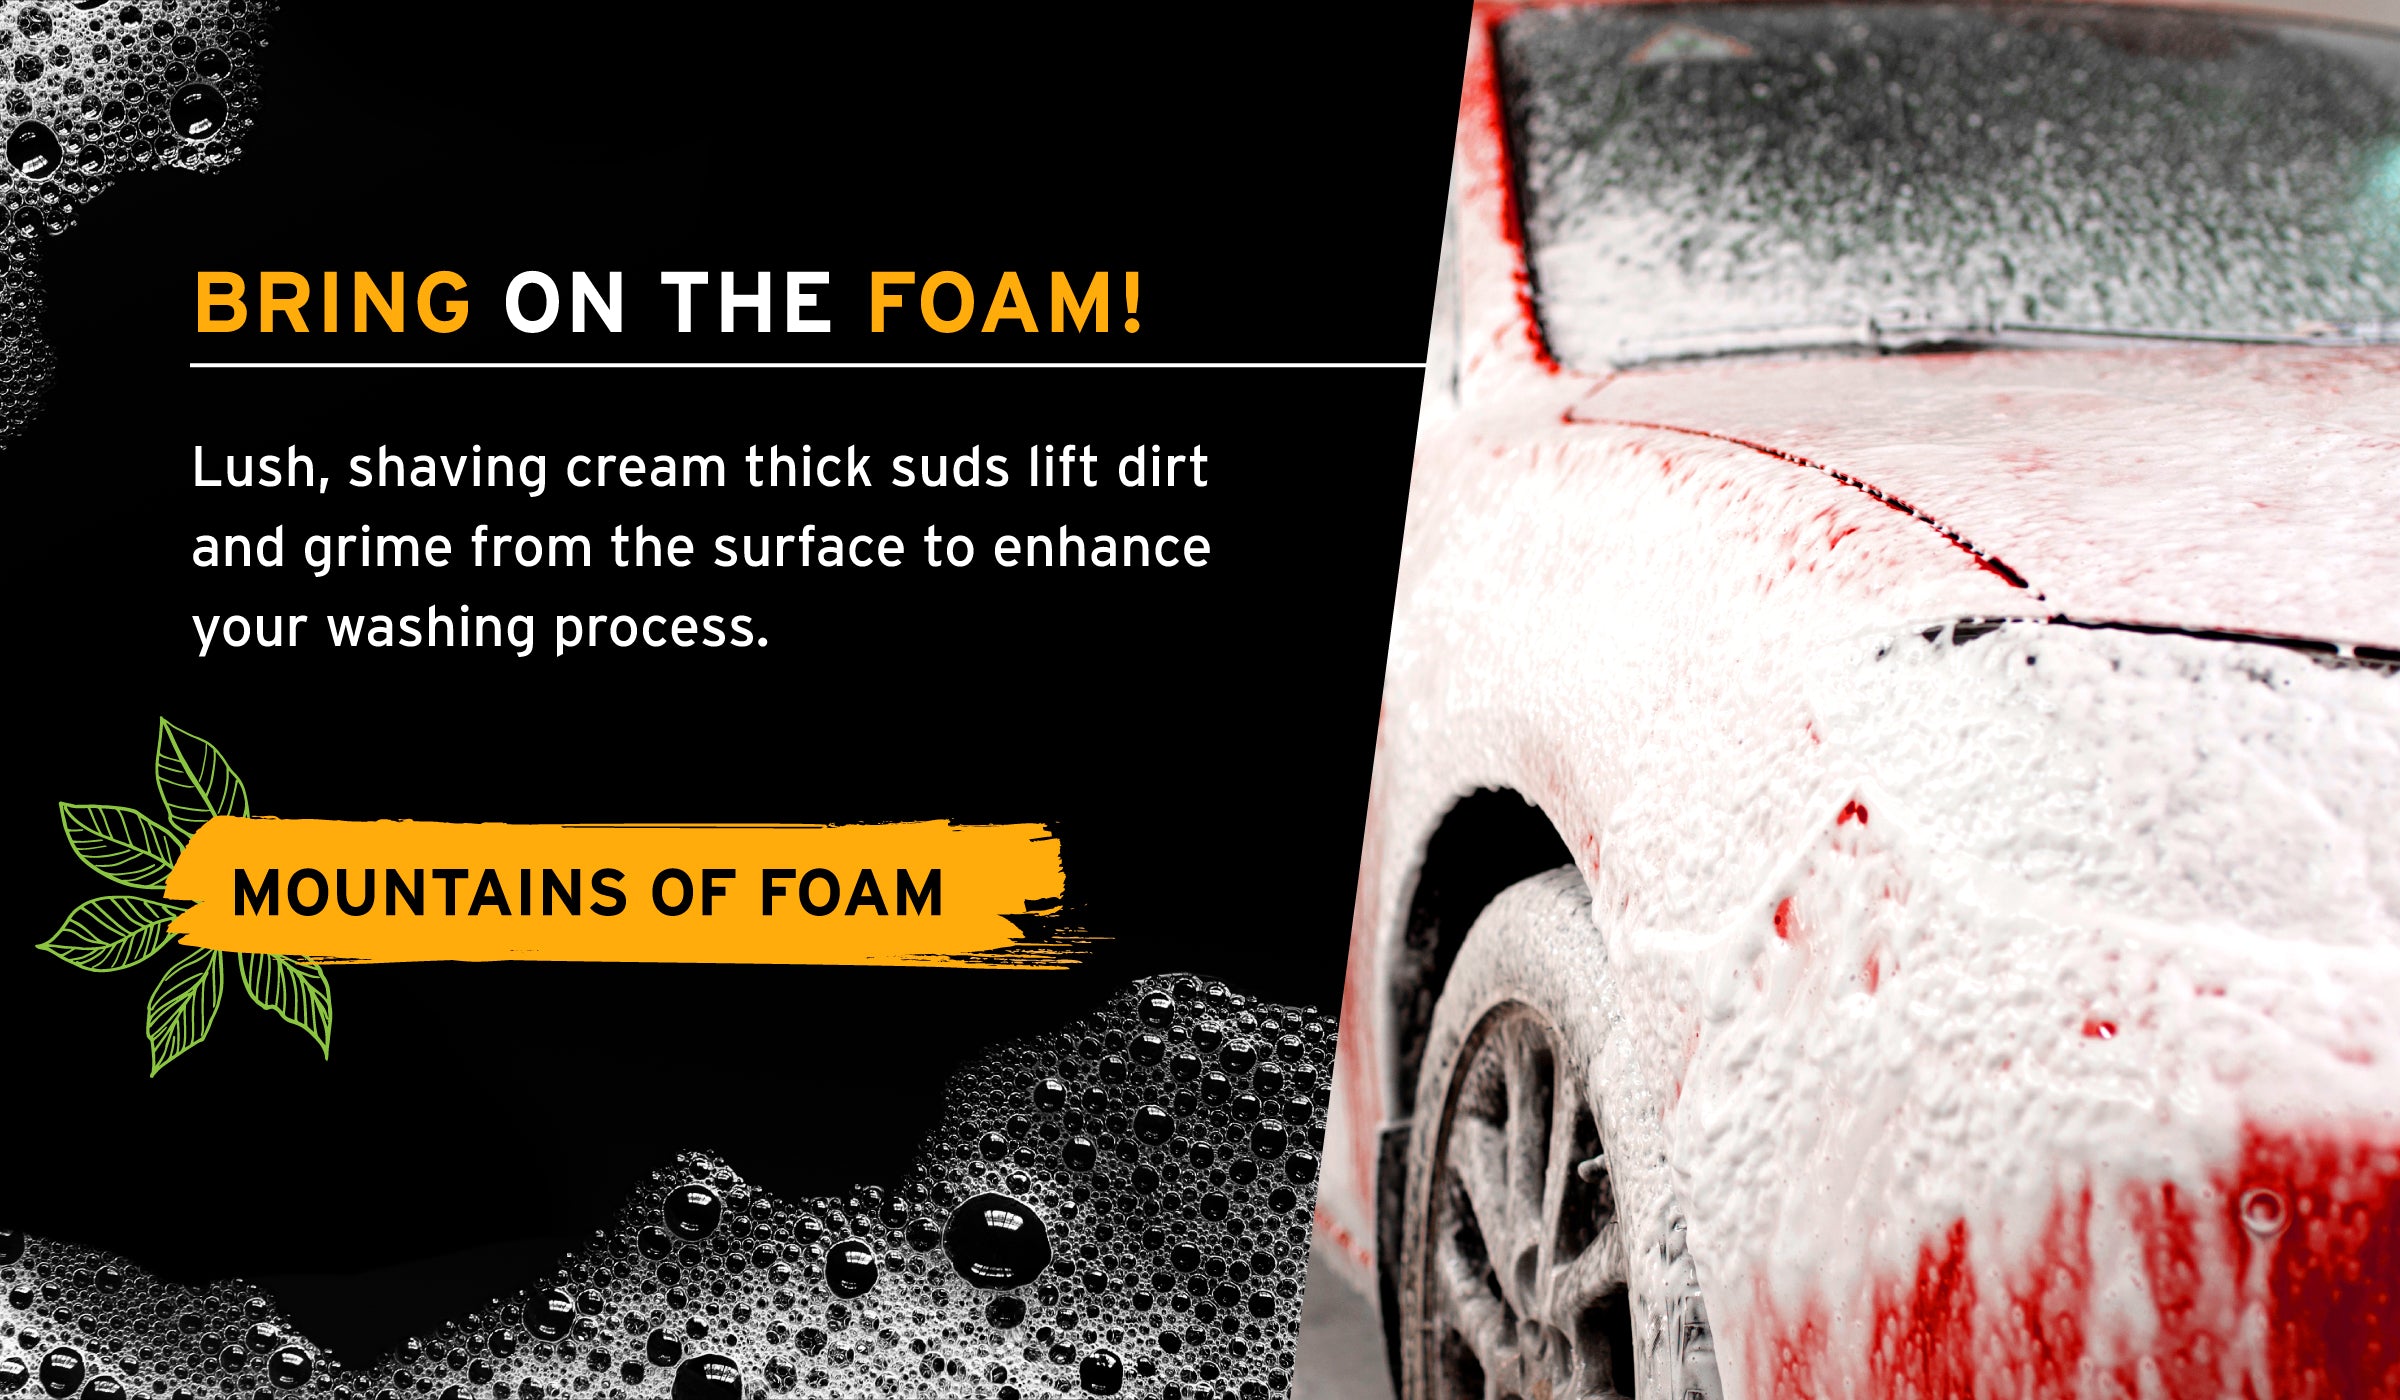 Foam Party - Cannon Soap